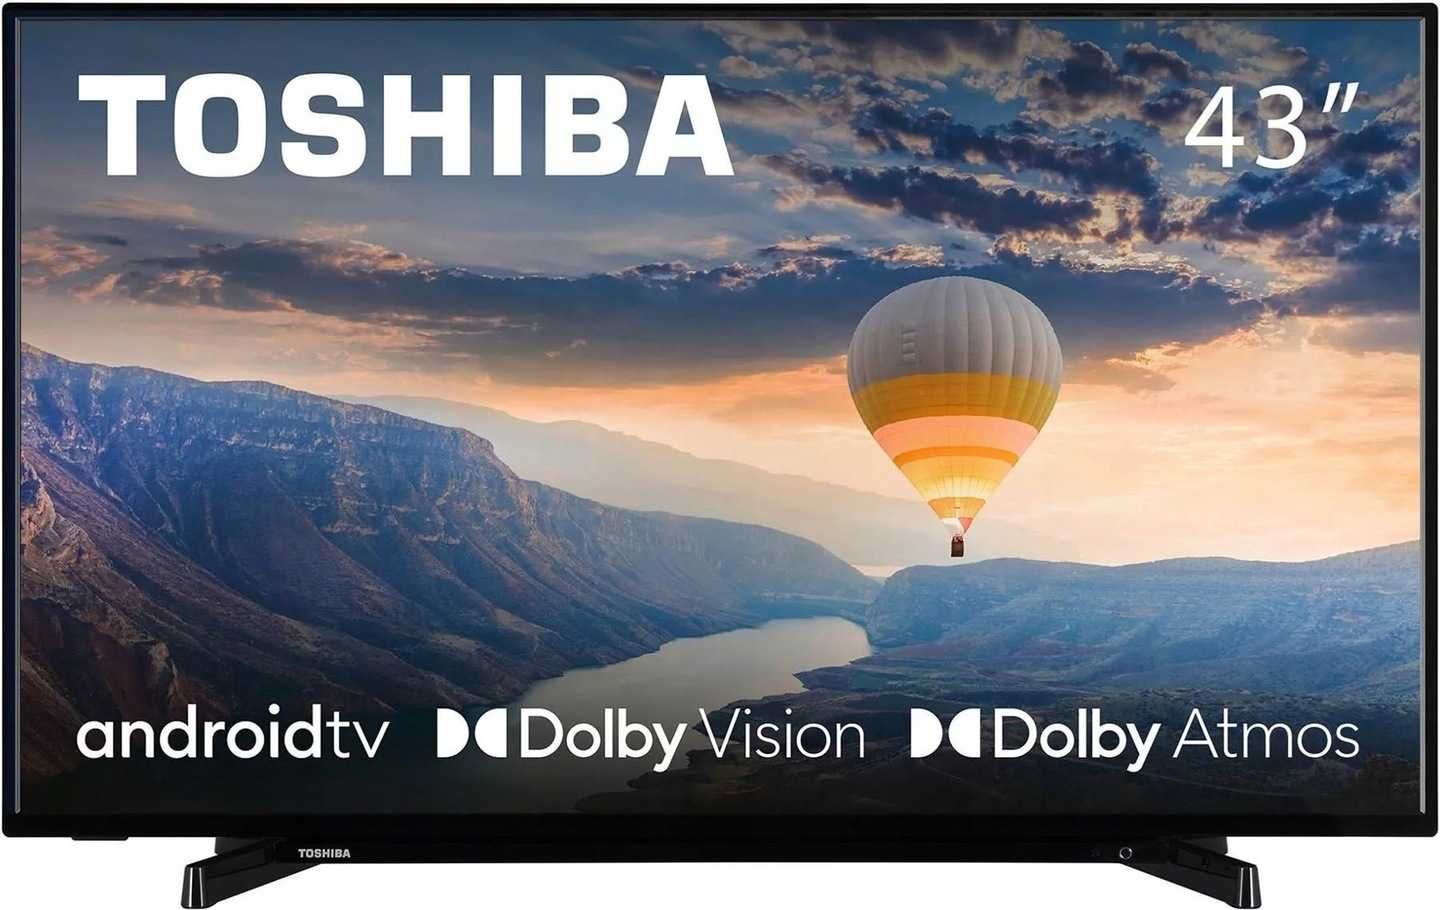 Телевізор 43 дюйми Toshiba 43UA2263DG (Android TV 4K T2/S2 Bluetooth)